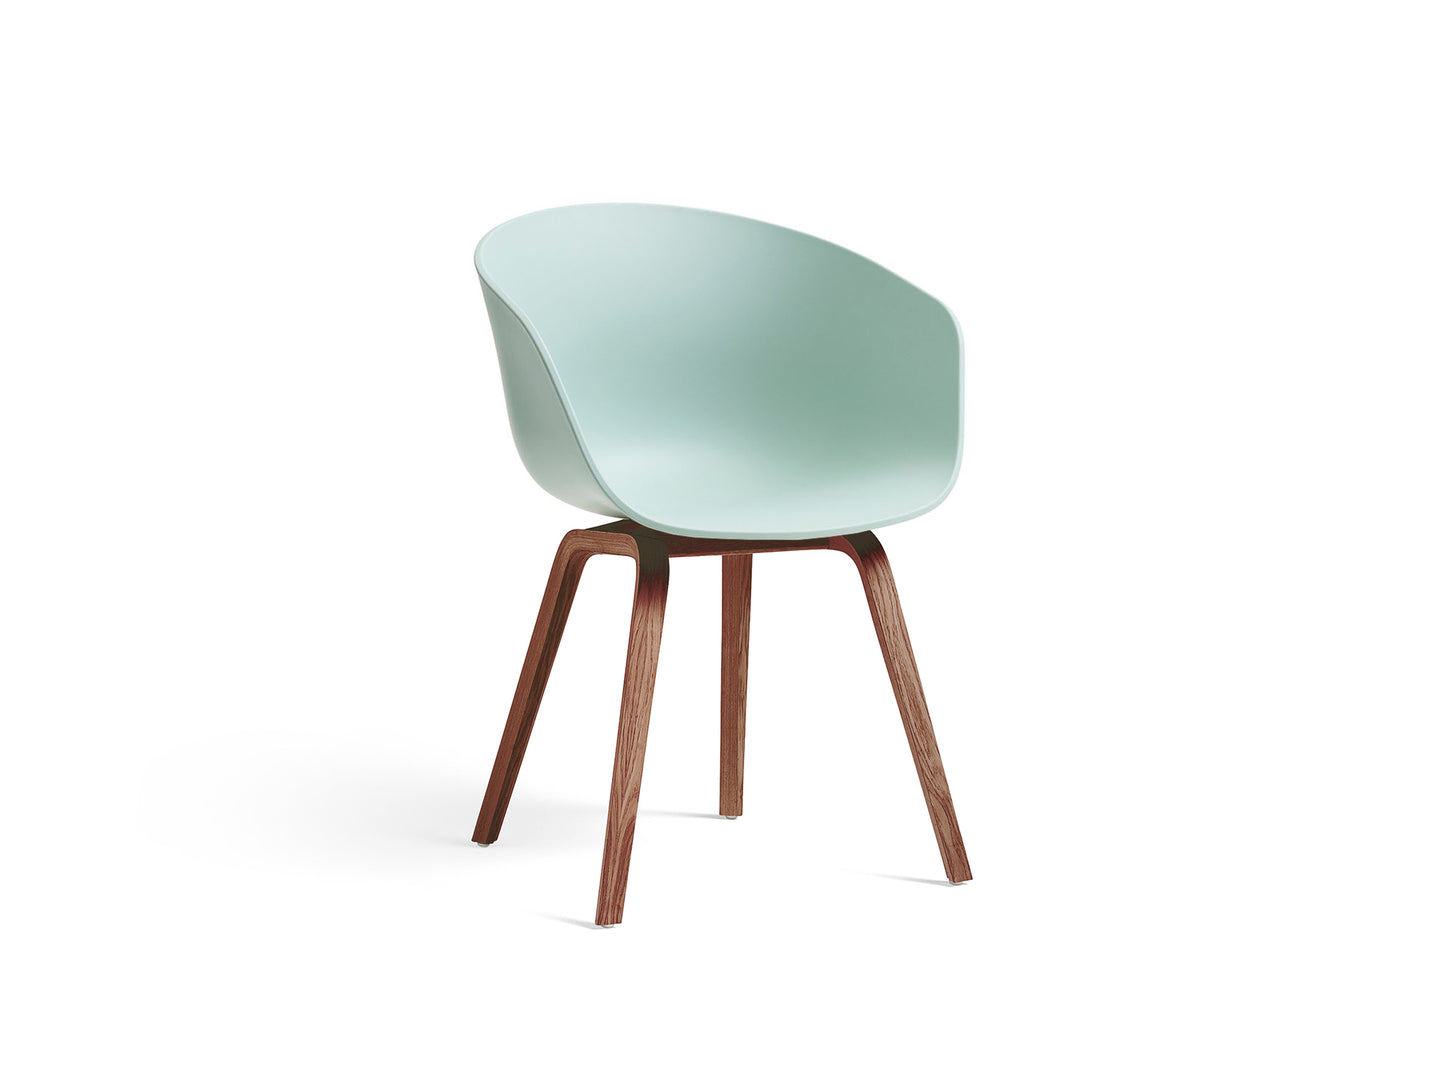 A Chair AAC 22 소개 - 새로운 색상